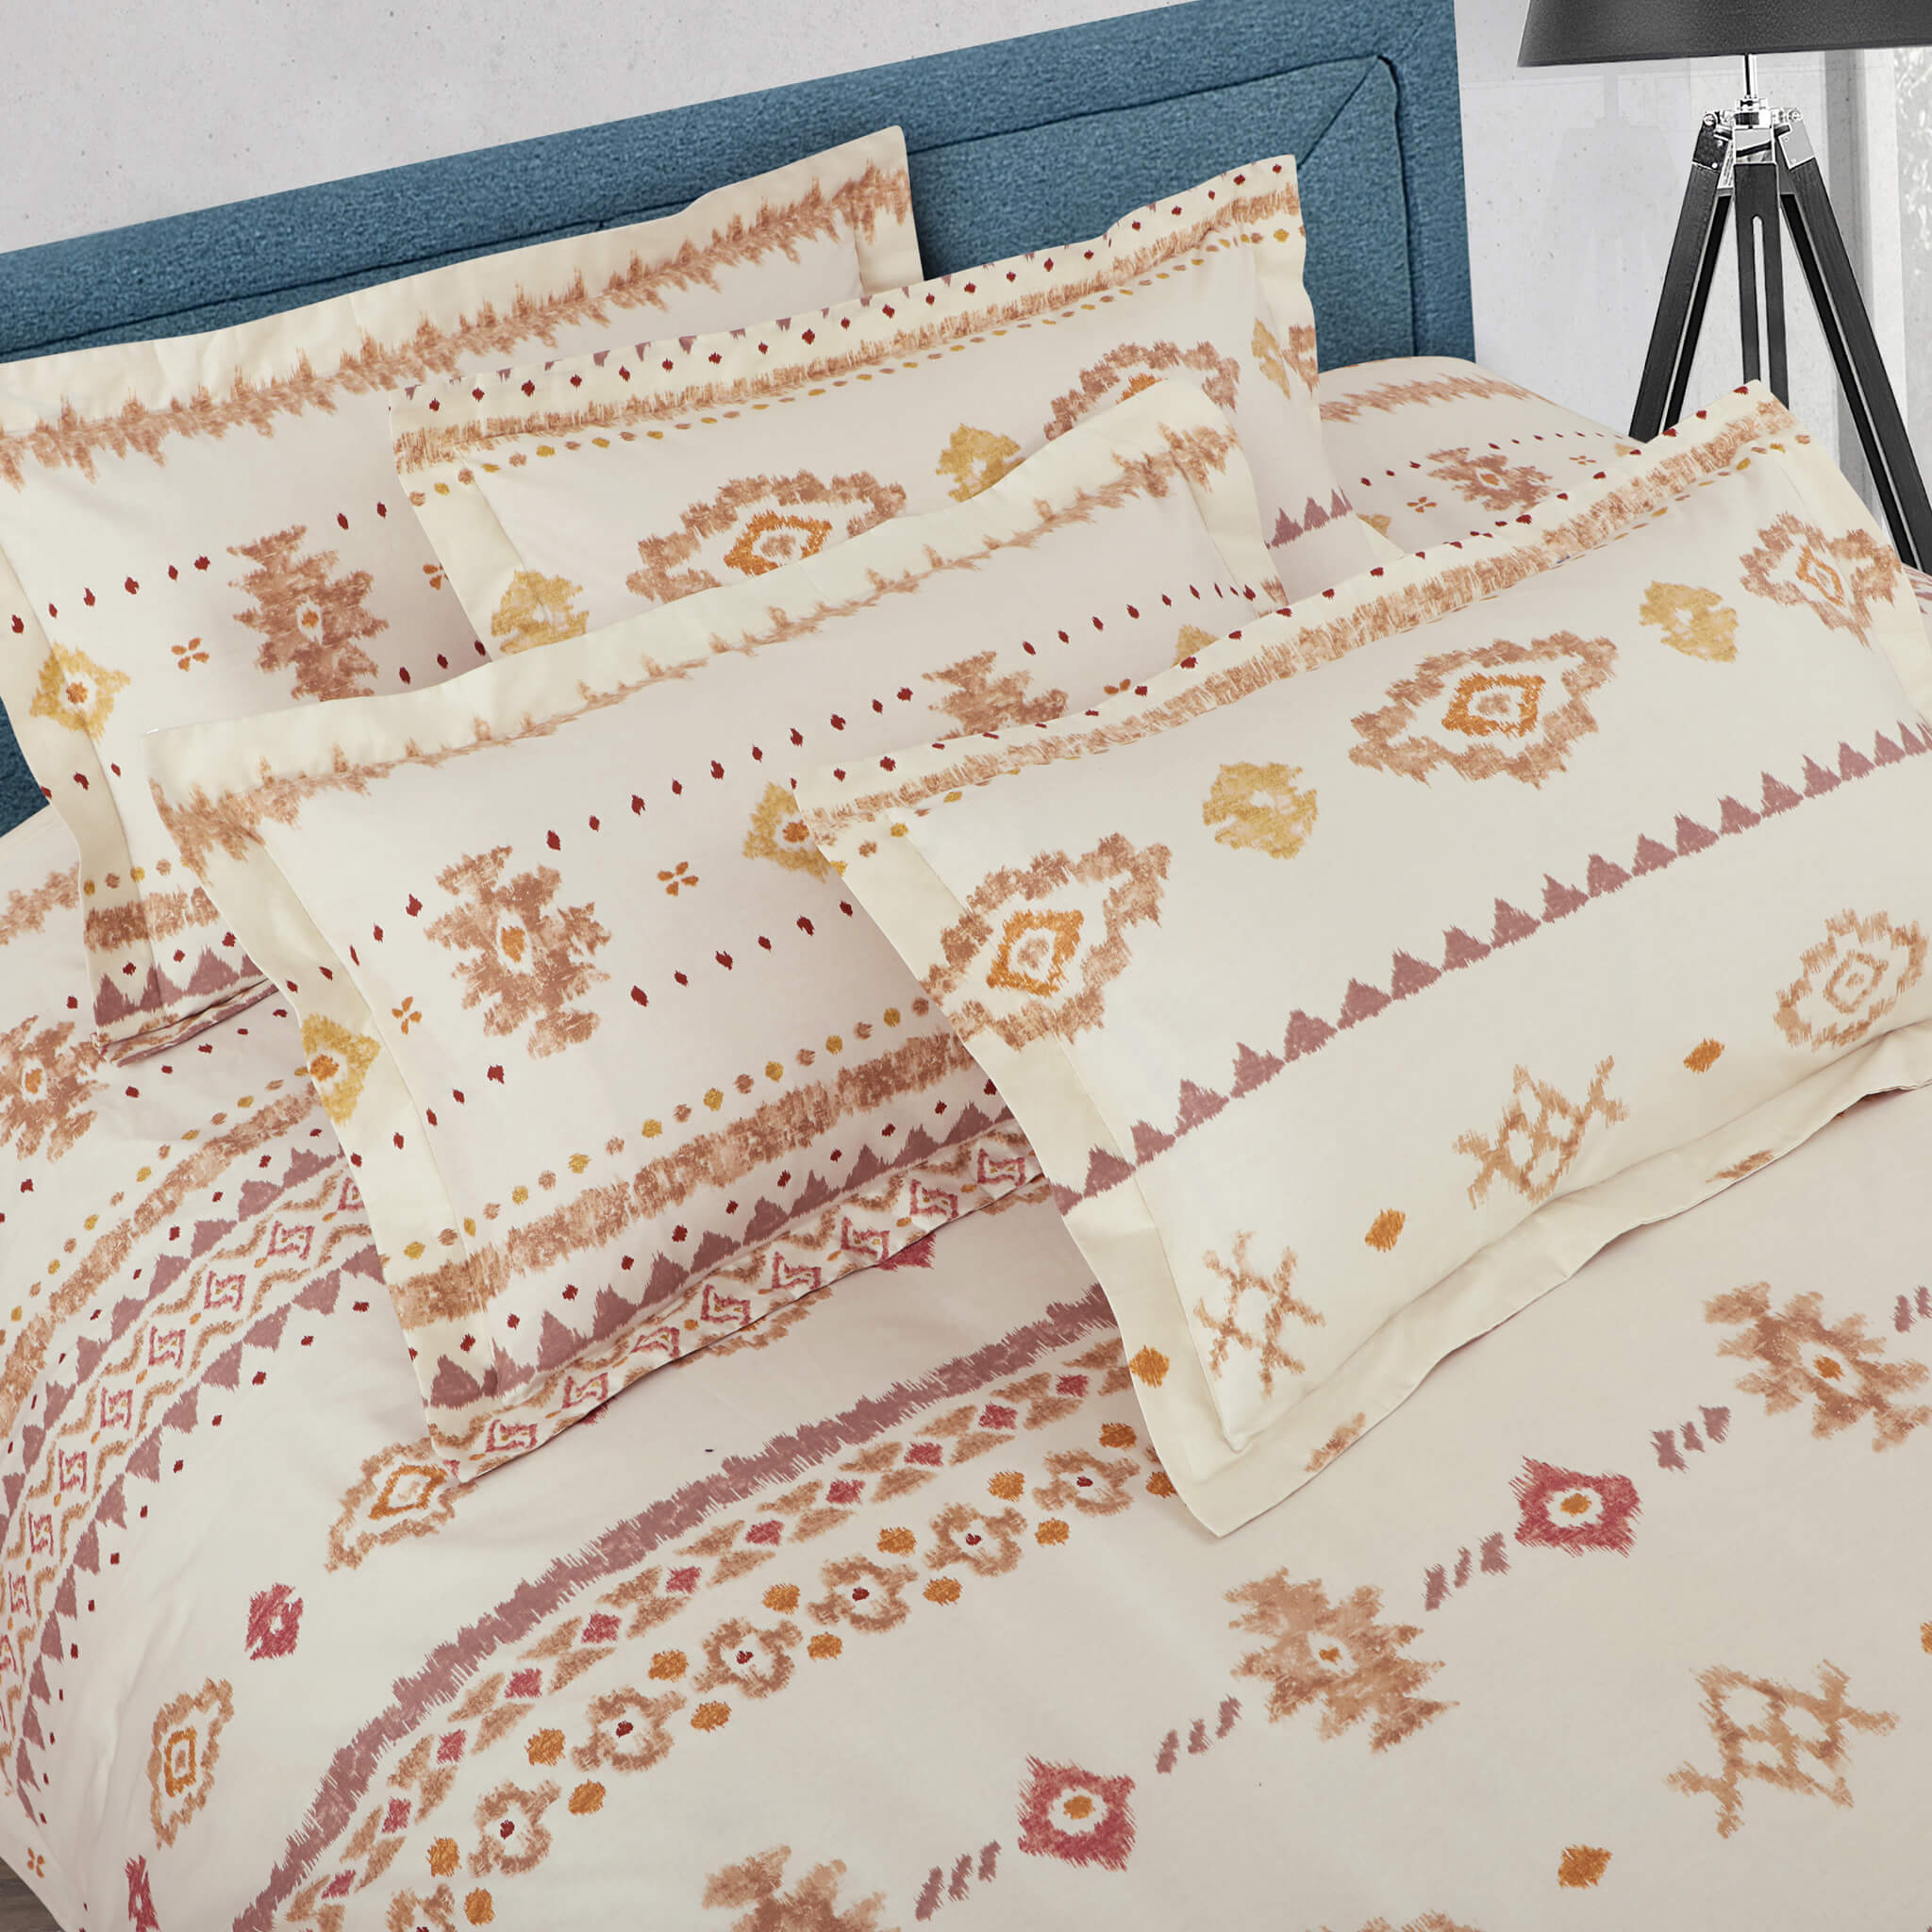 Malako Royale XL Off White Abstract 100% Cotton King Size Bed Sheet/Bedding Set - MALAKO